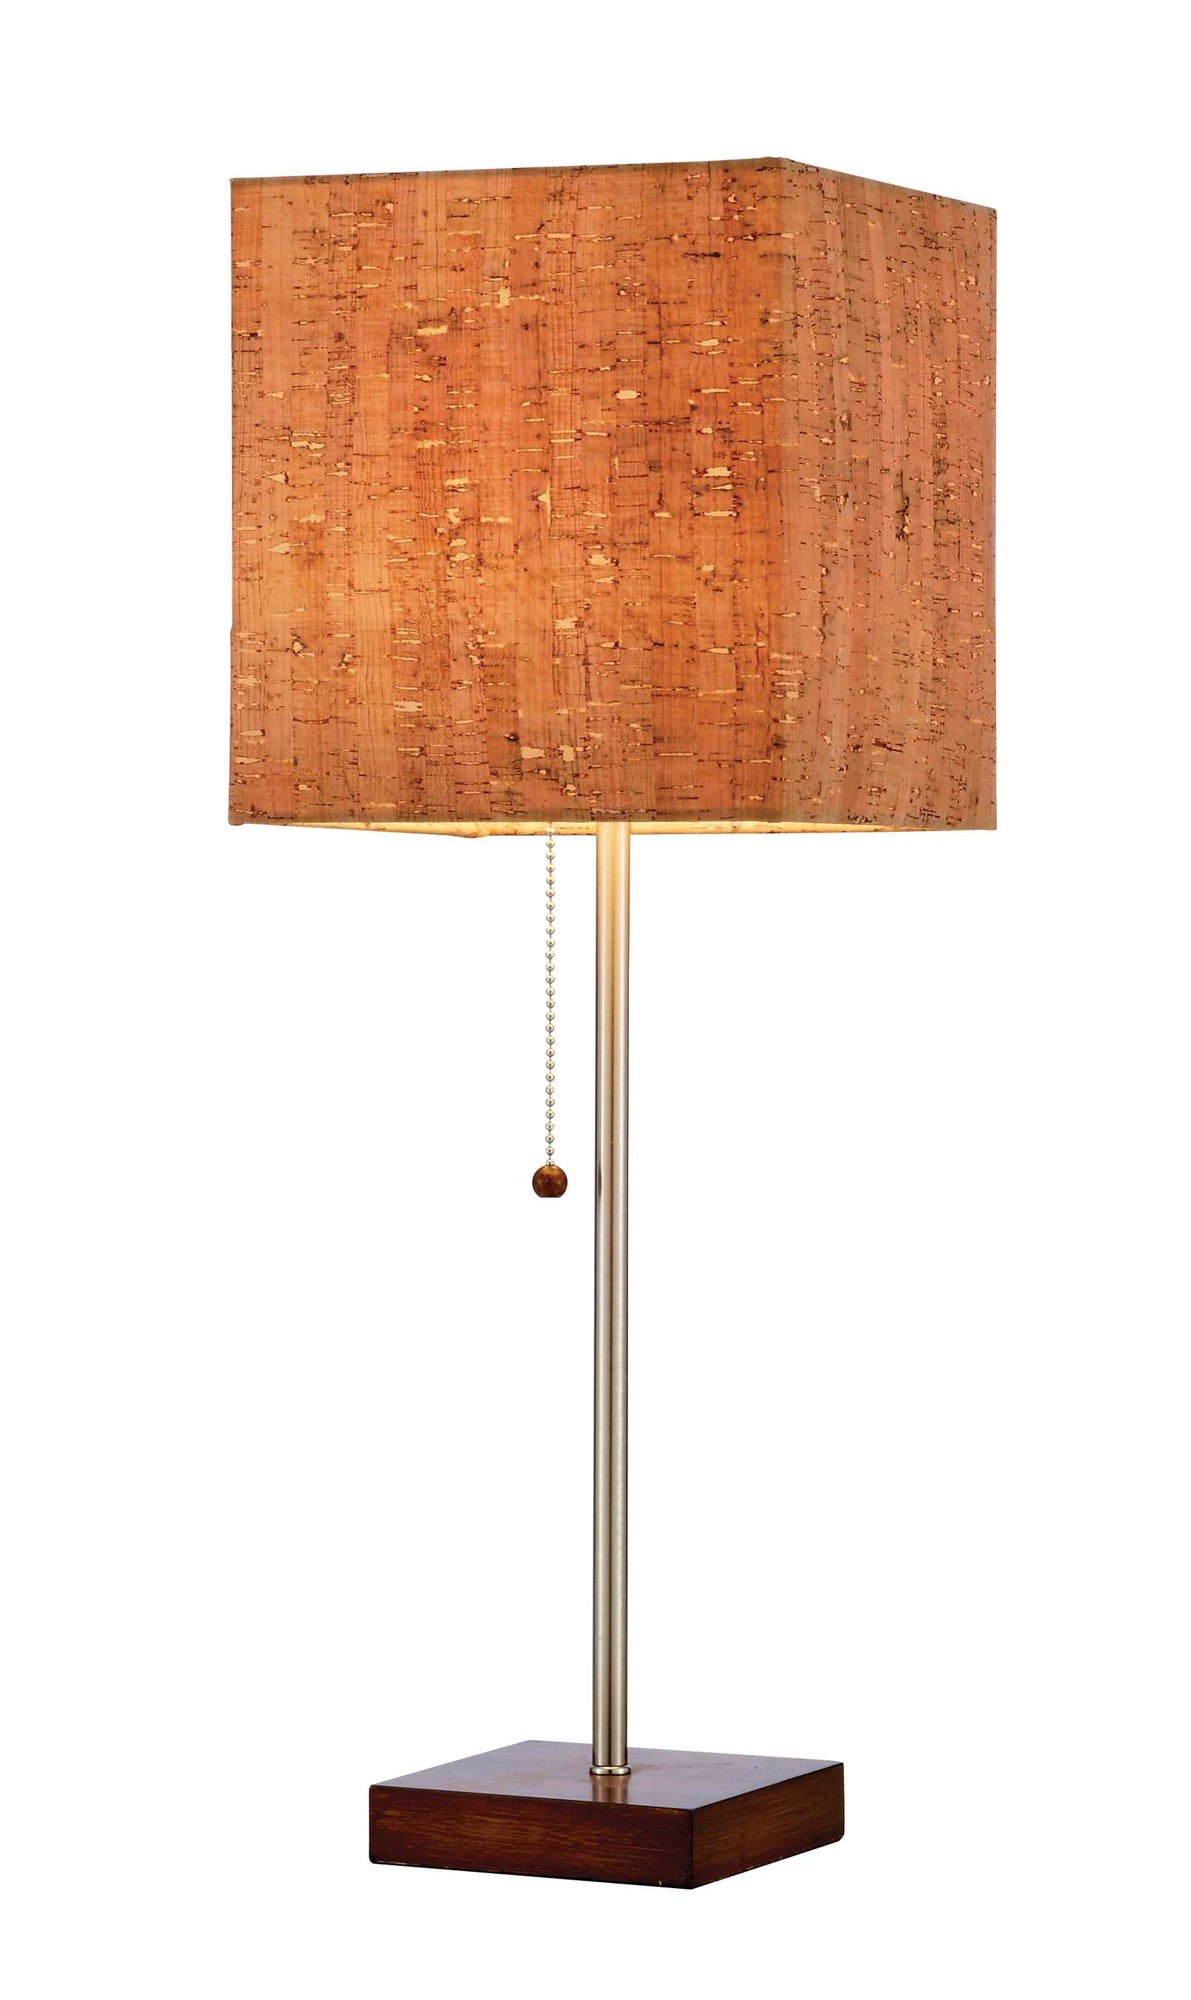 7.5" X 7.5" X 21.5" Walnut Shade Table Lamp